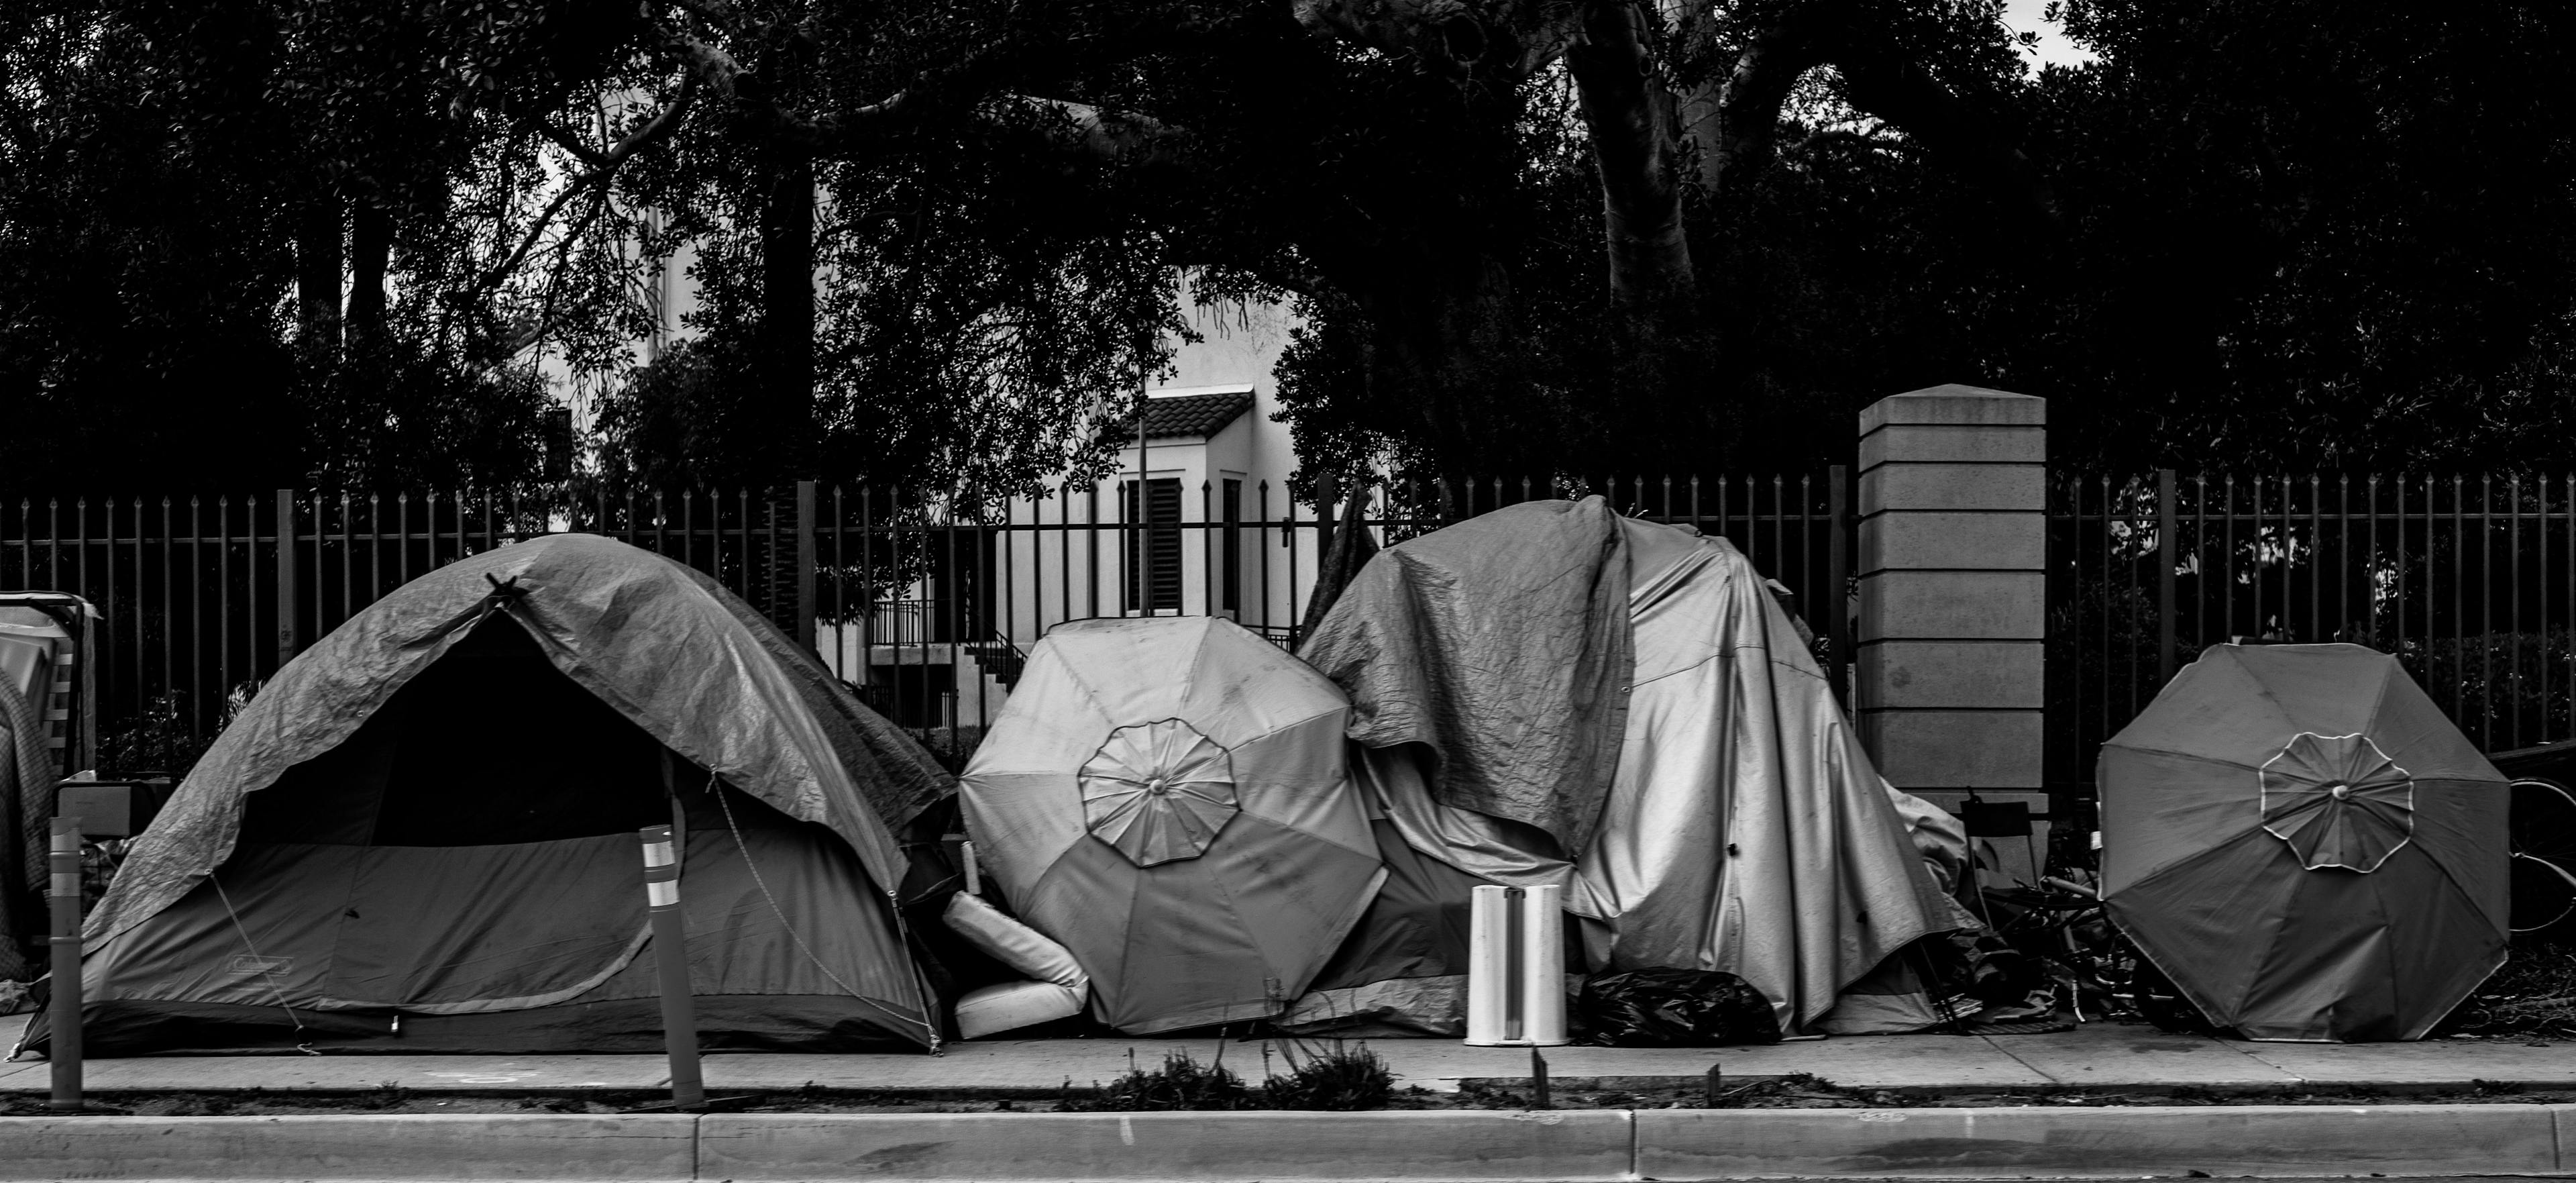 A homeless encampment | Image Credit: Inam - stock.adobe.com